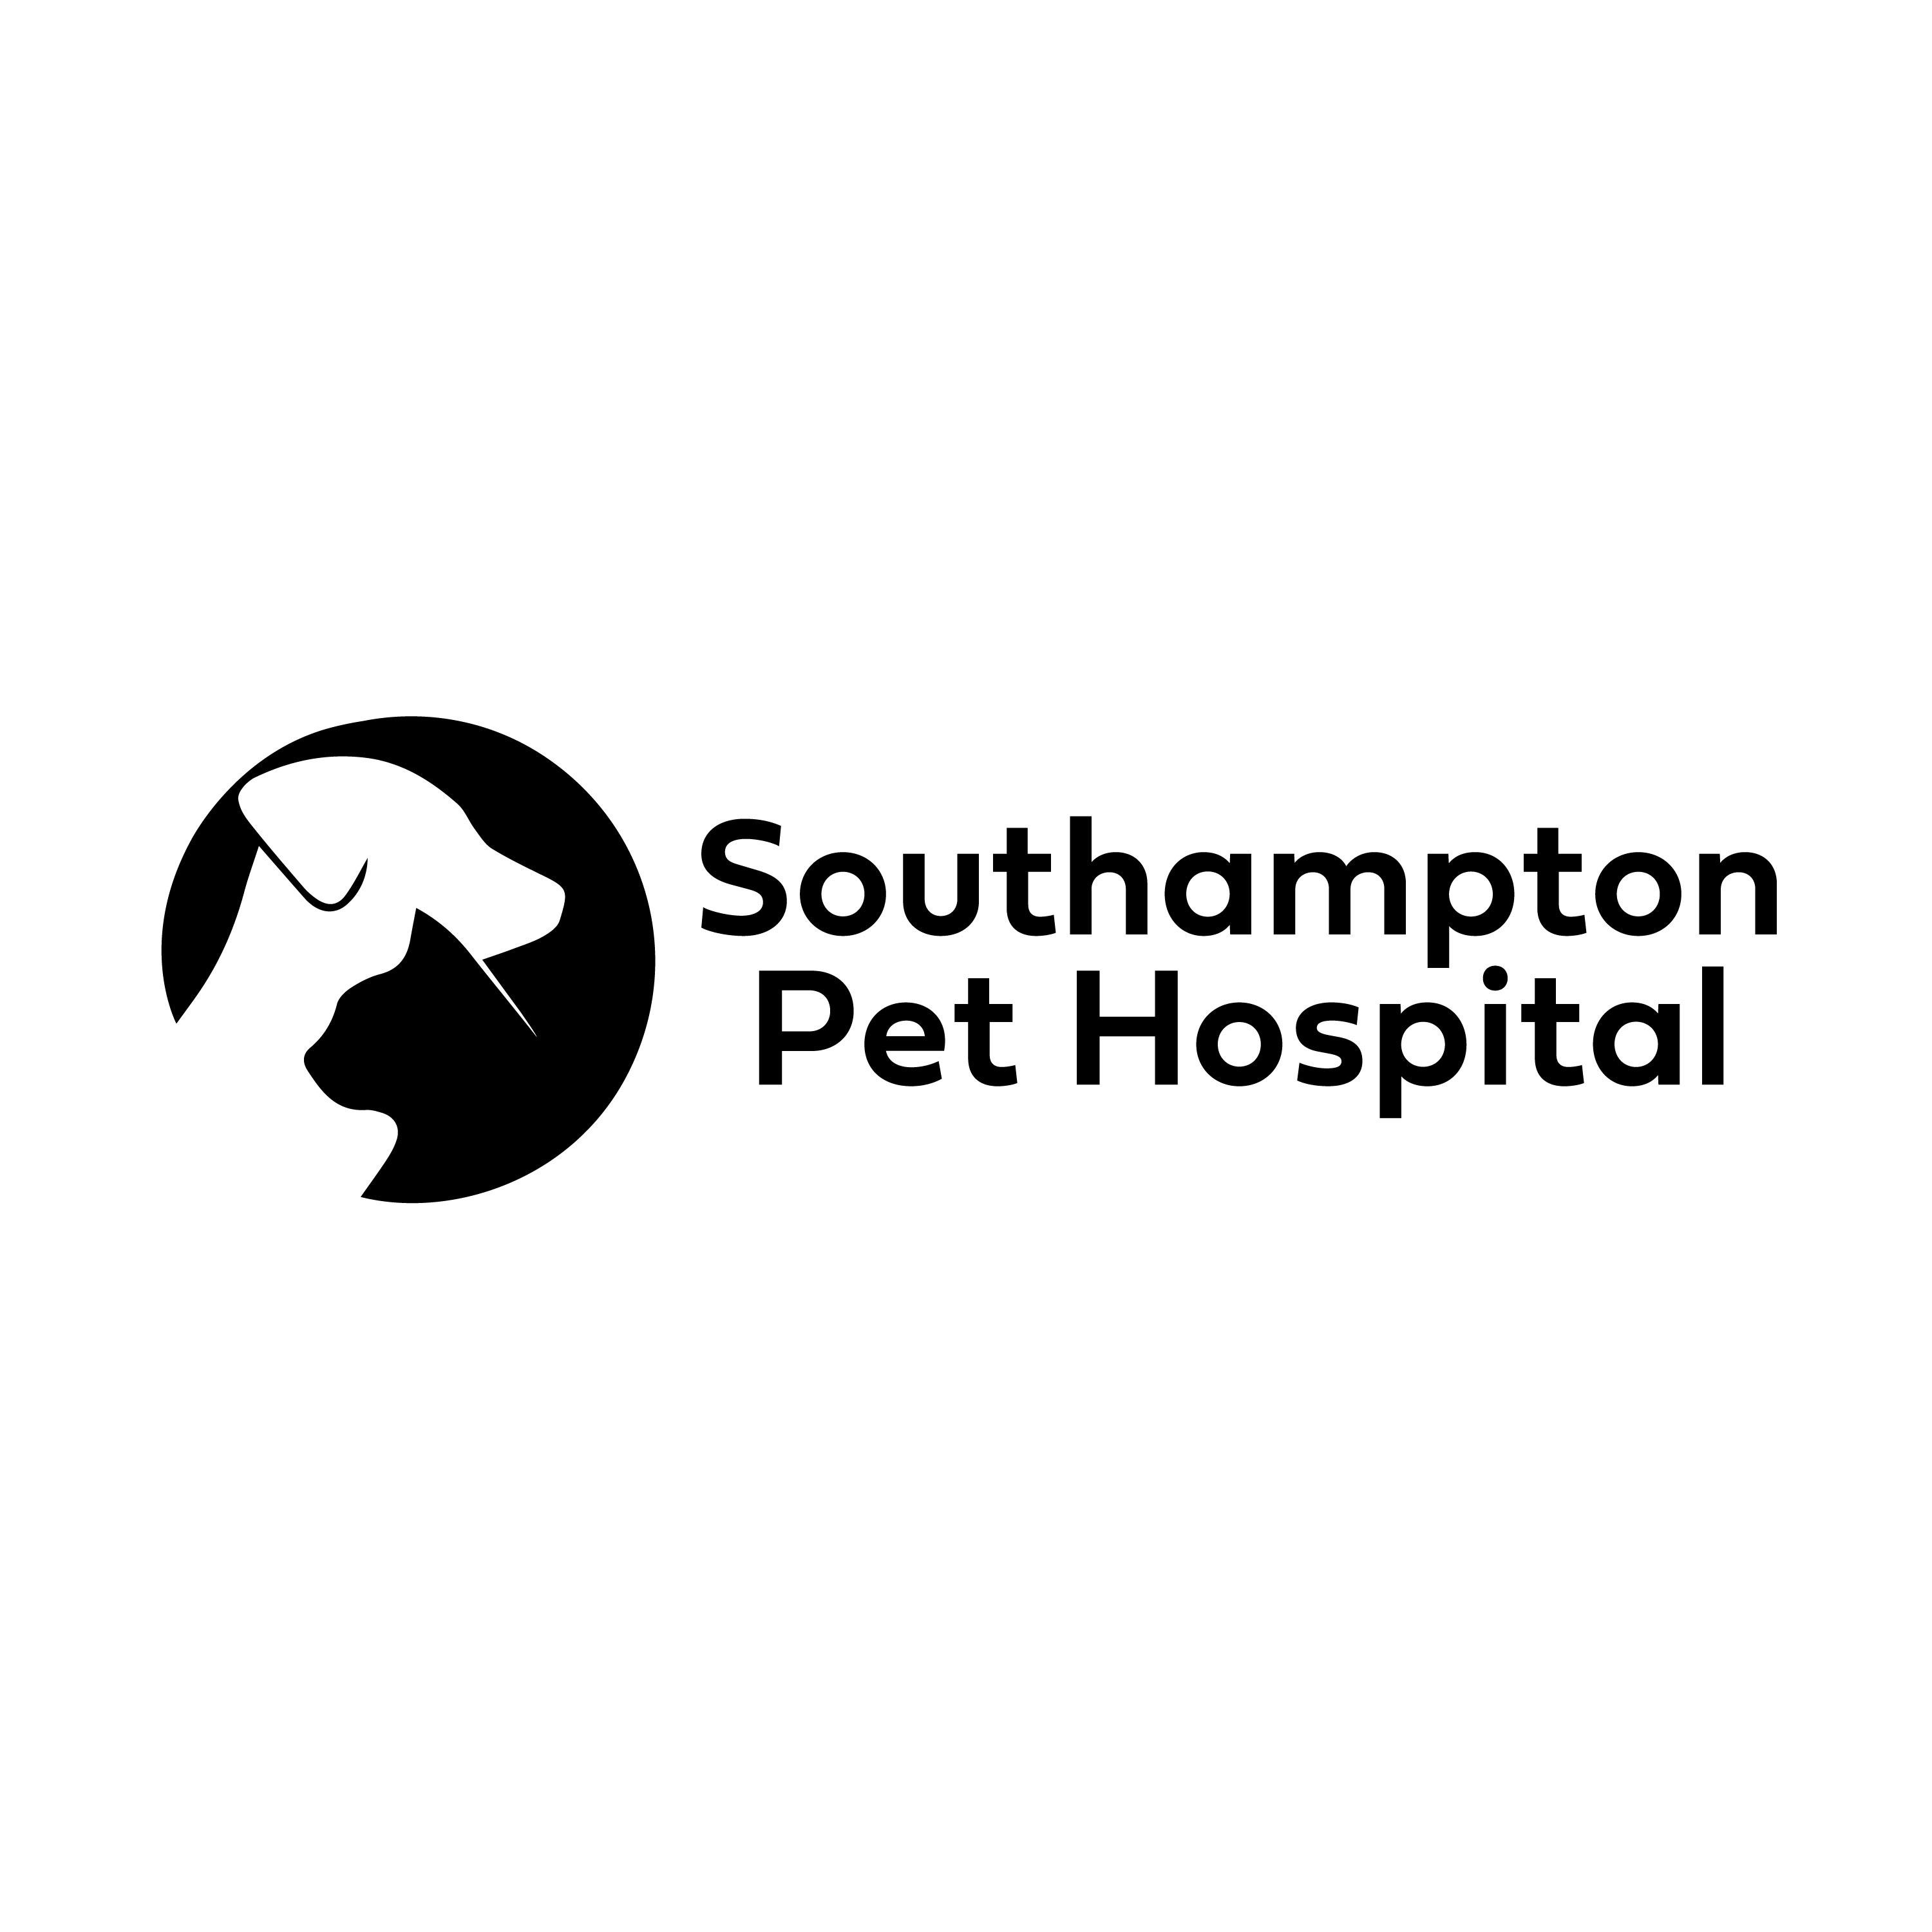 Southampton Pet Hospital